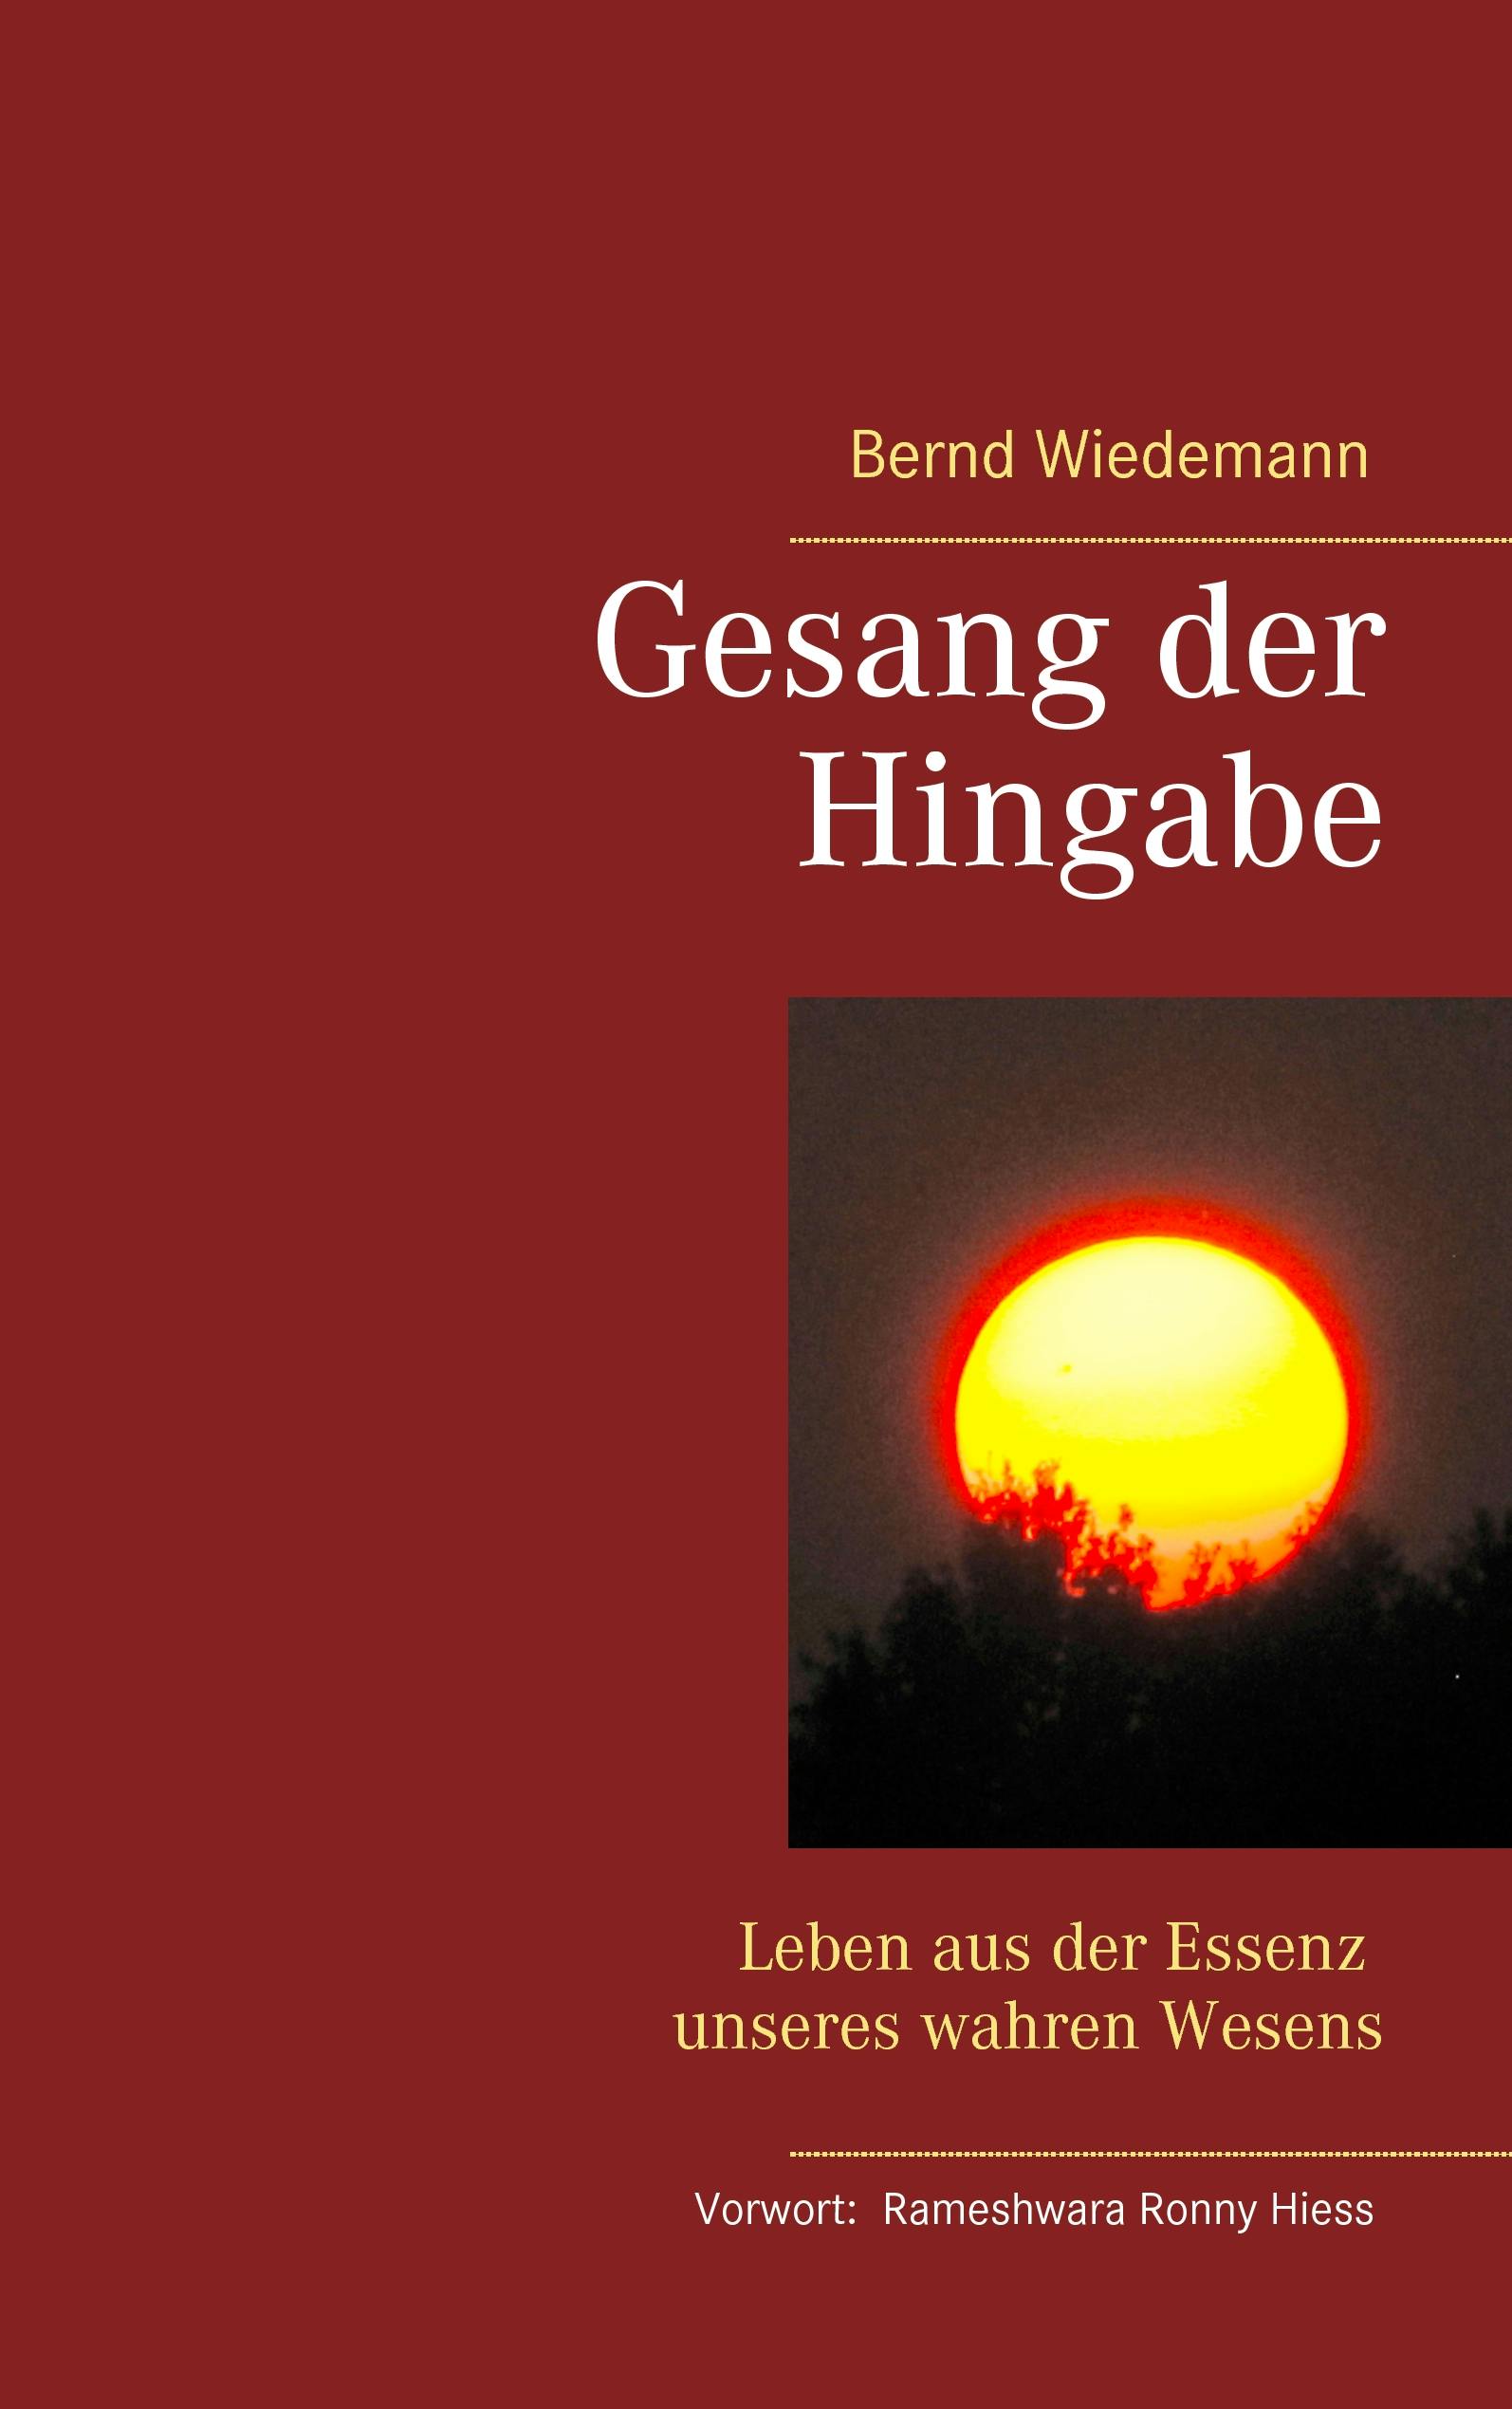 Gesang der Hingabe - Bernd Wiedemann